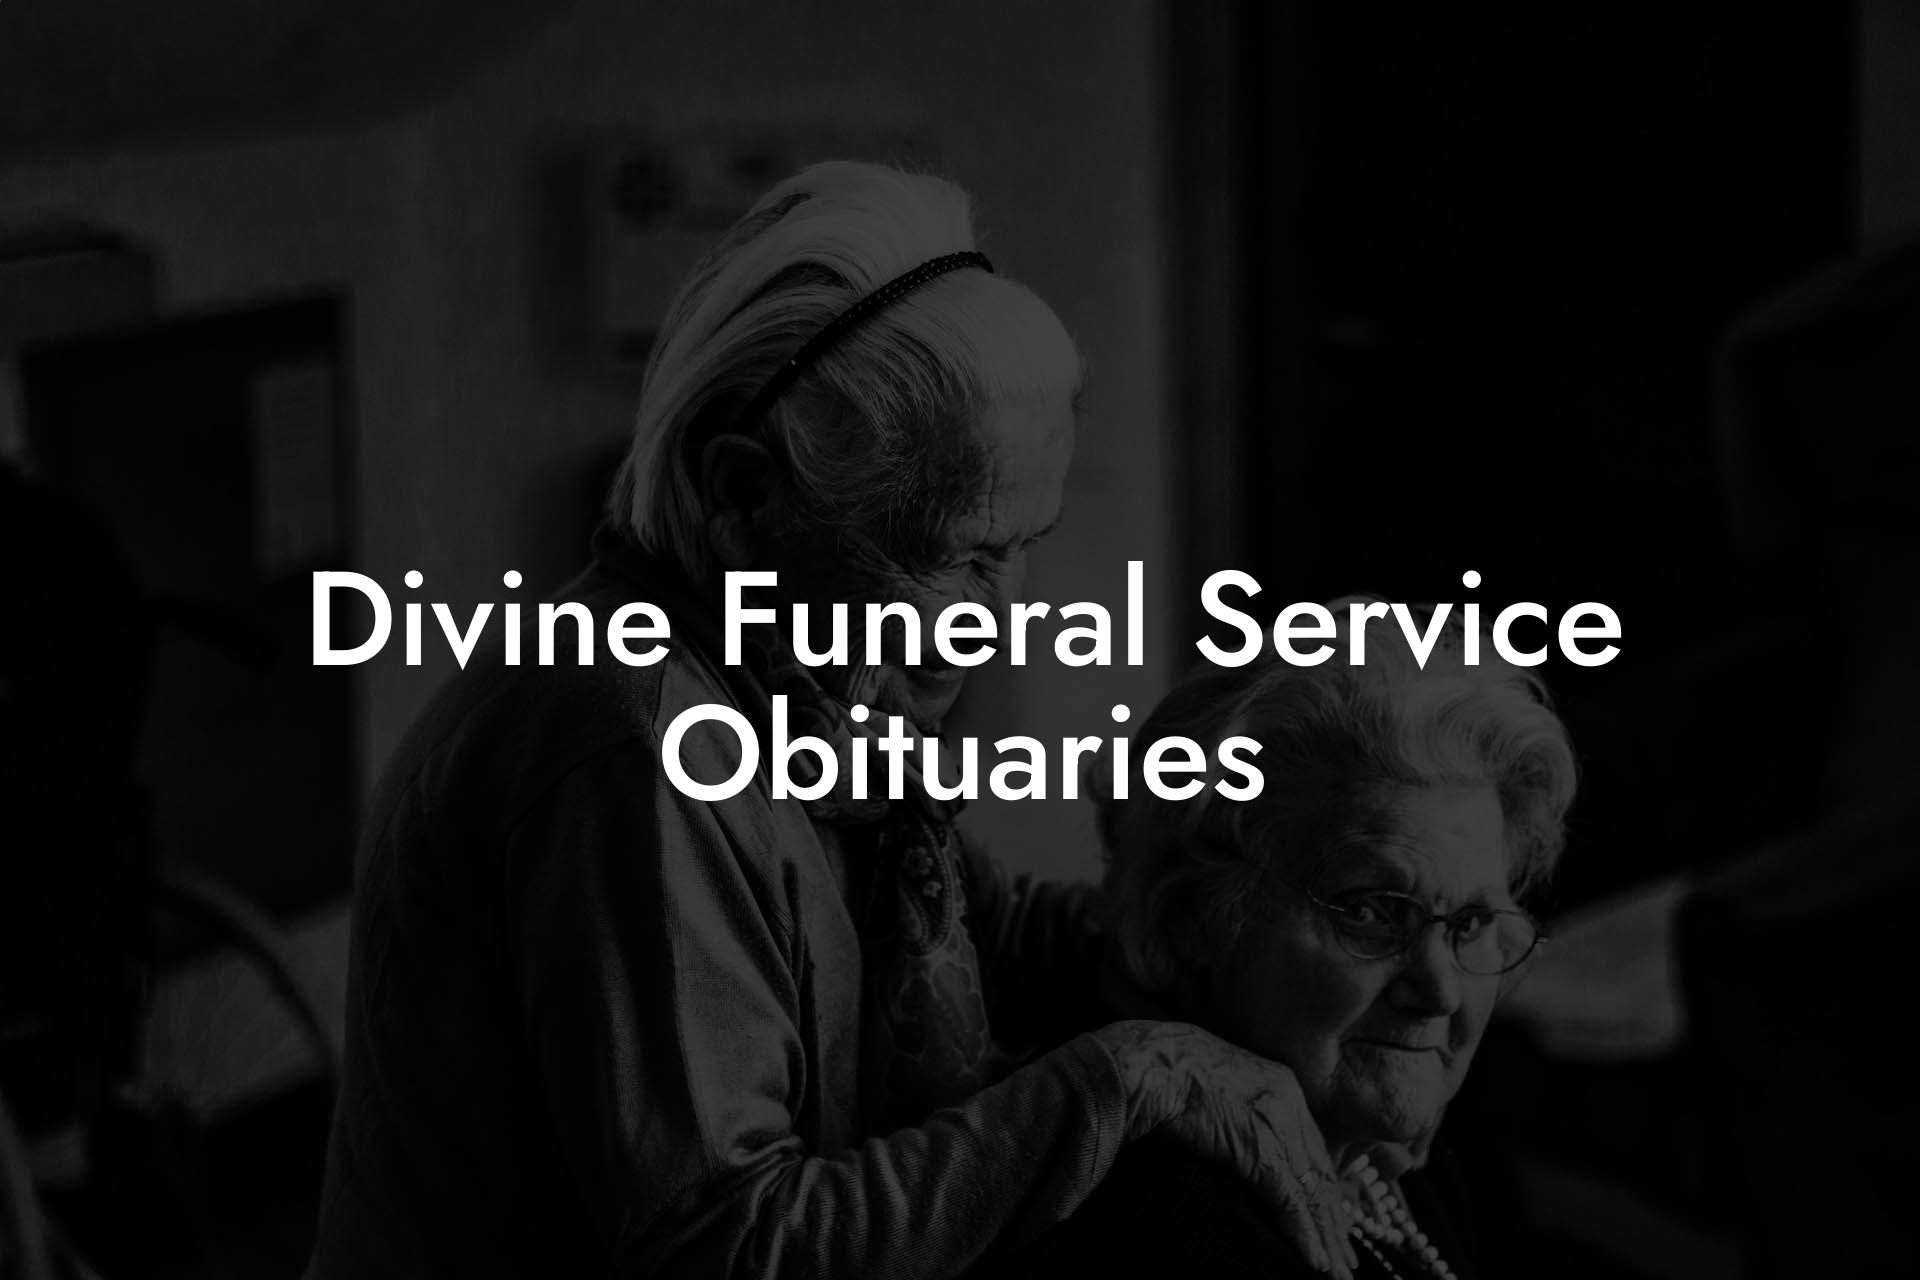 Divine Funeral Service Obituaries